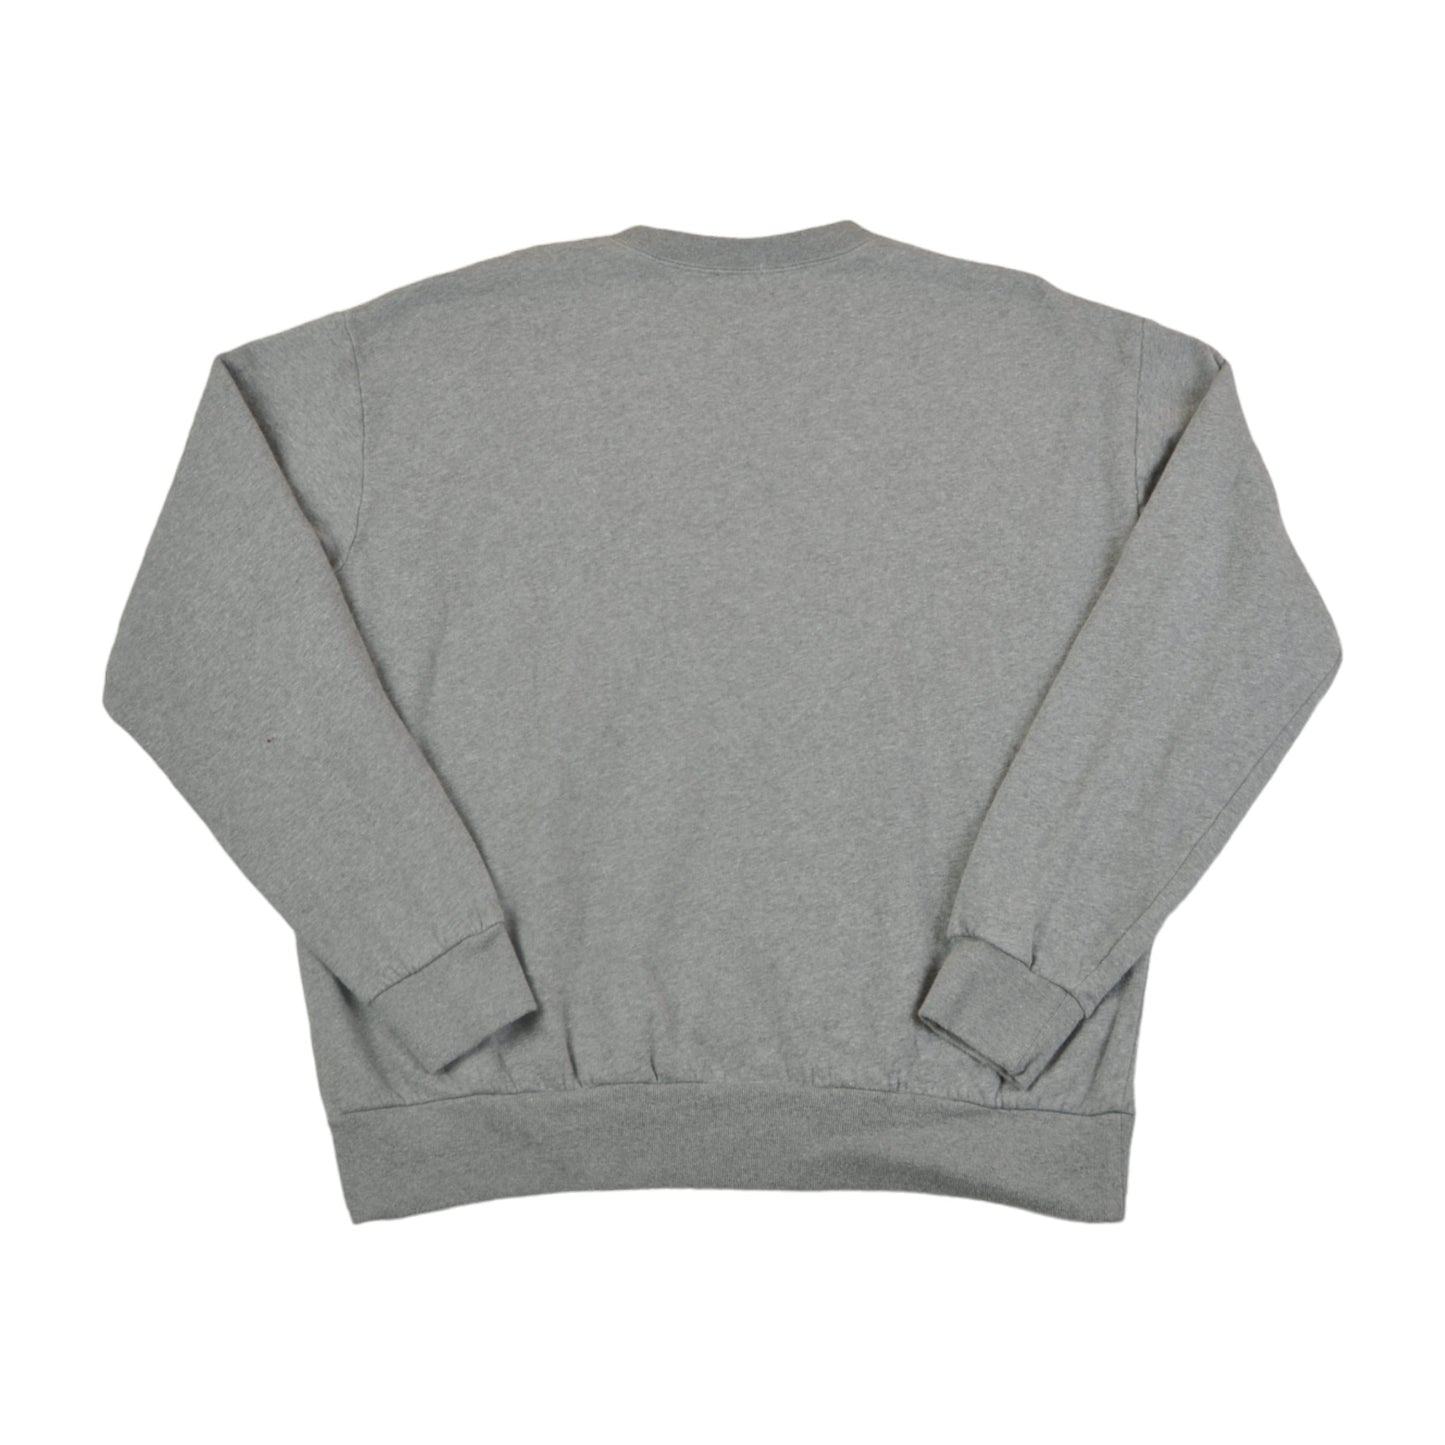 Vintage Los Angeles California Sweatshirt Grey Large